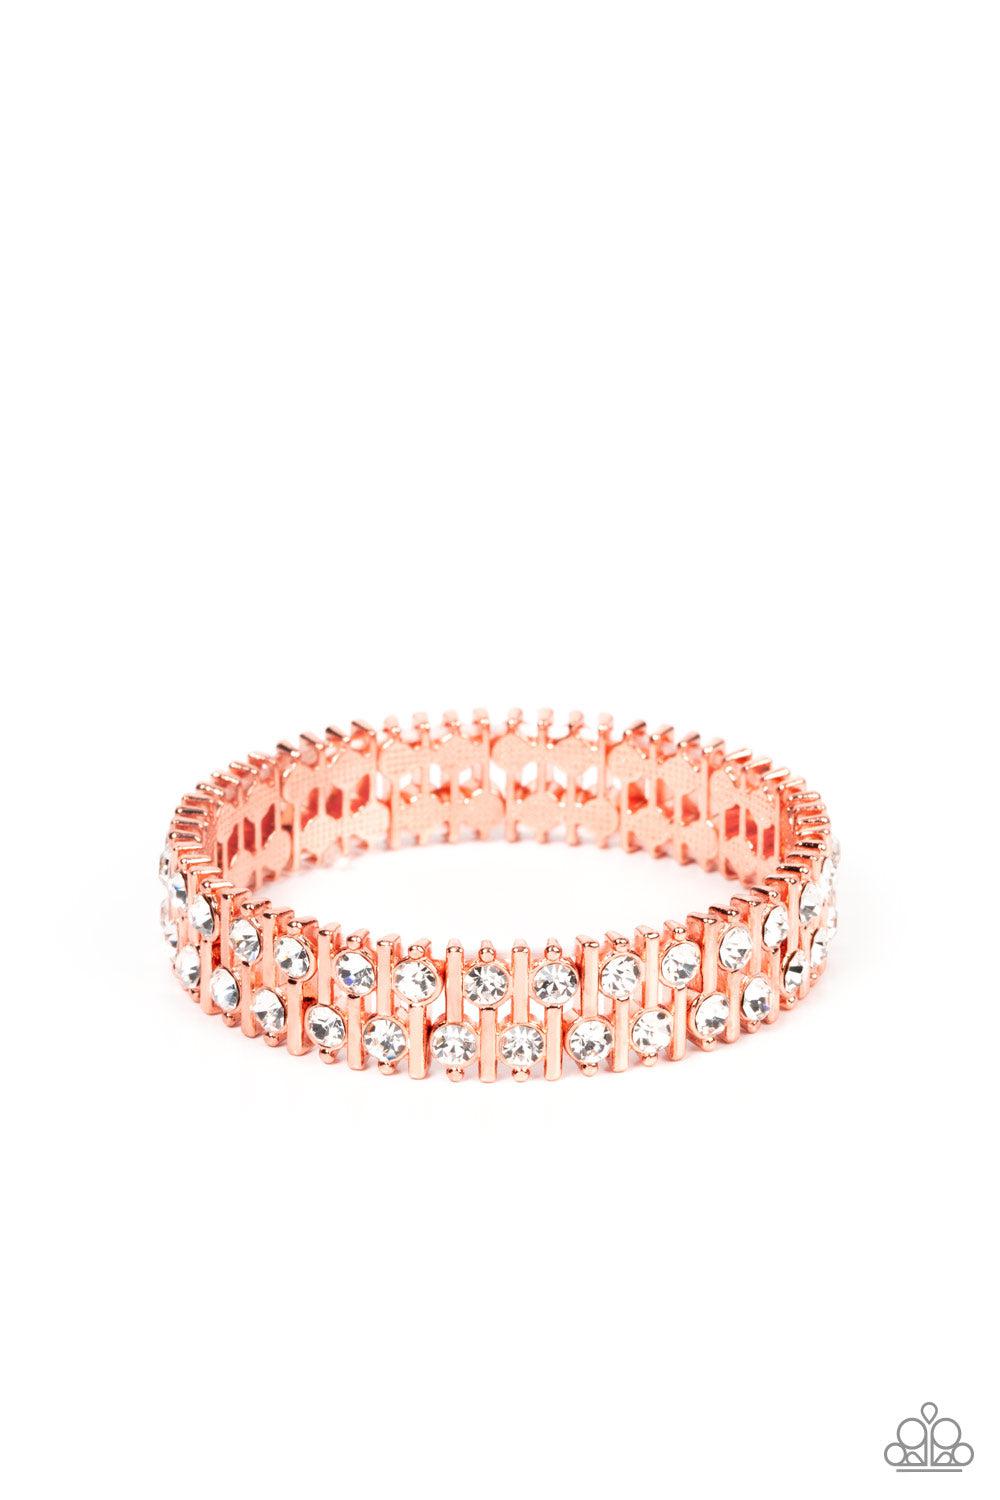 Generational Glimmer Copper & White Rhinestone Bracelet - Paparazzi Accessories- lightbox - CarasShop.com - $5 Jewelry by Cara Jewels